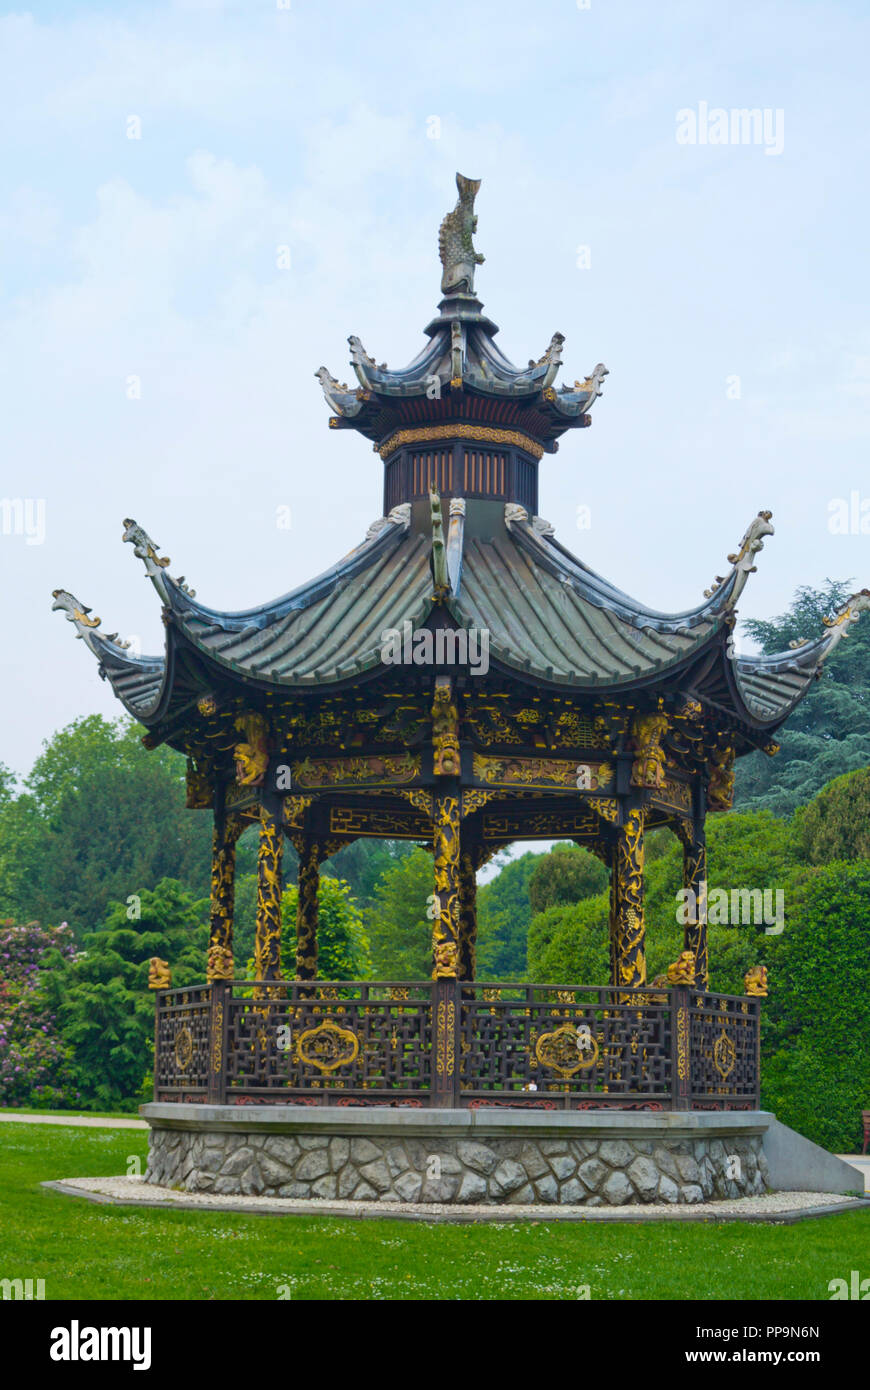 Pavillon Chinois, Chinesisches Teehaus, Häuser Museen des Fernen Ostens, Mutsaard, Brüssel, Belgien Stockfoto